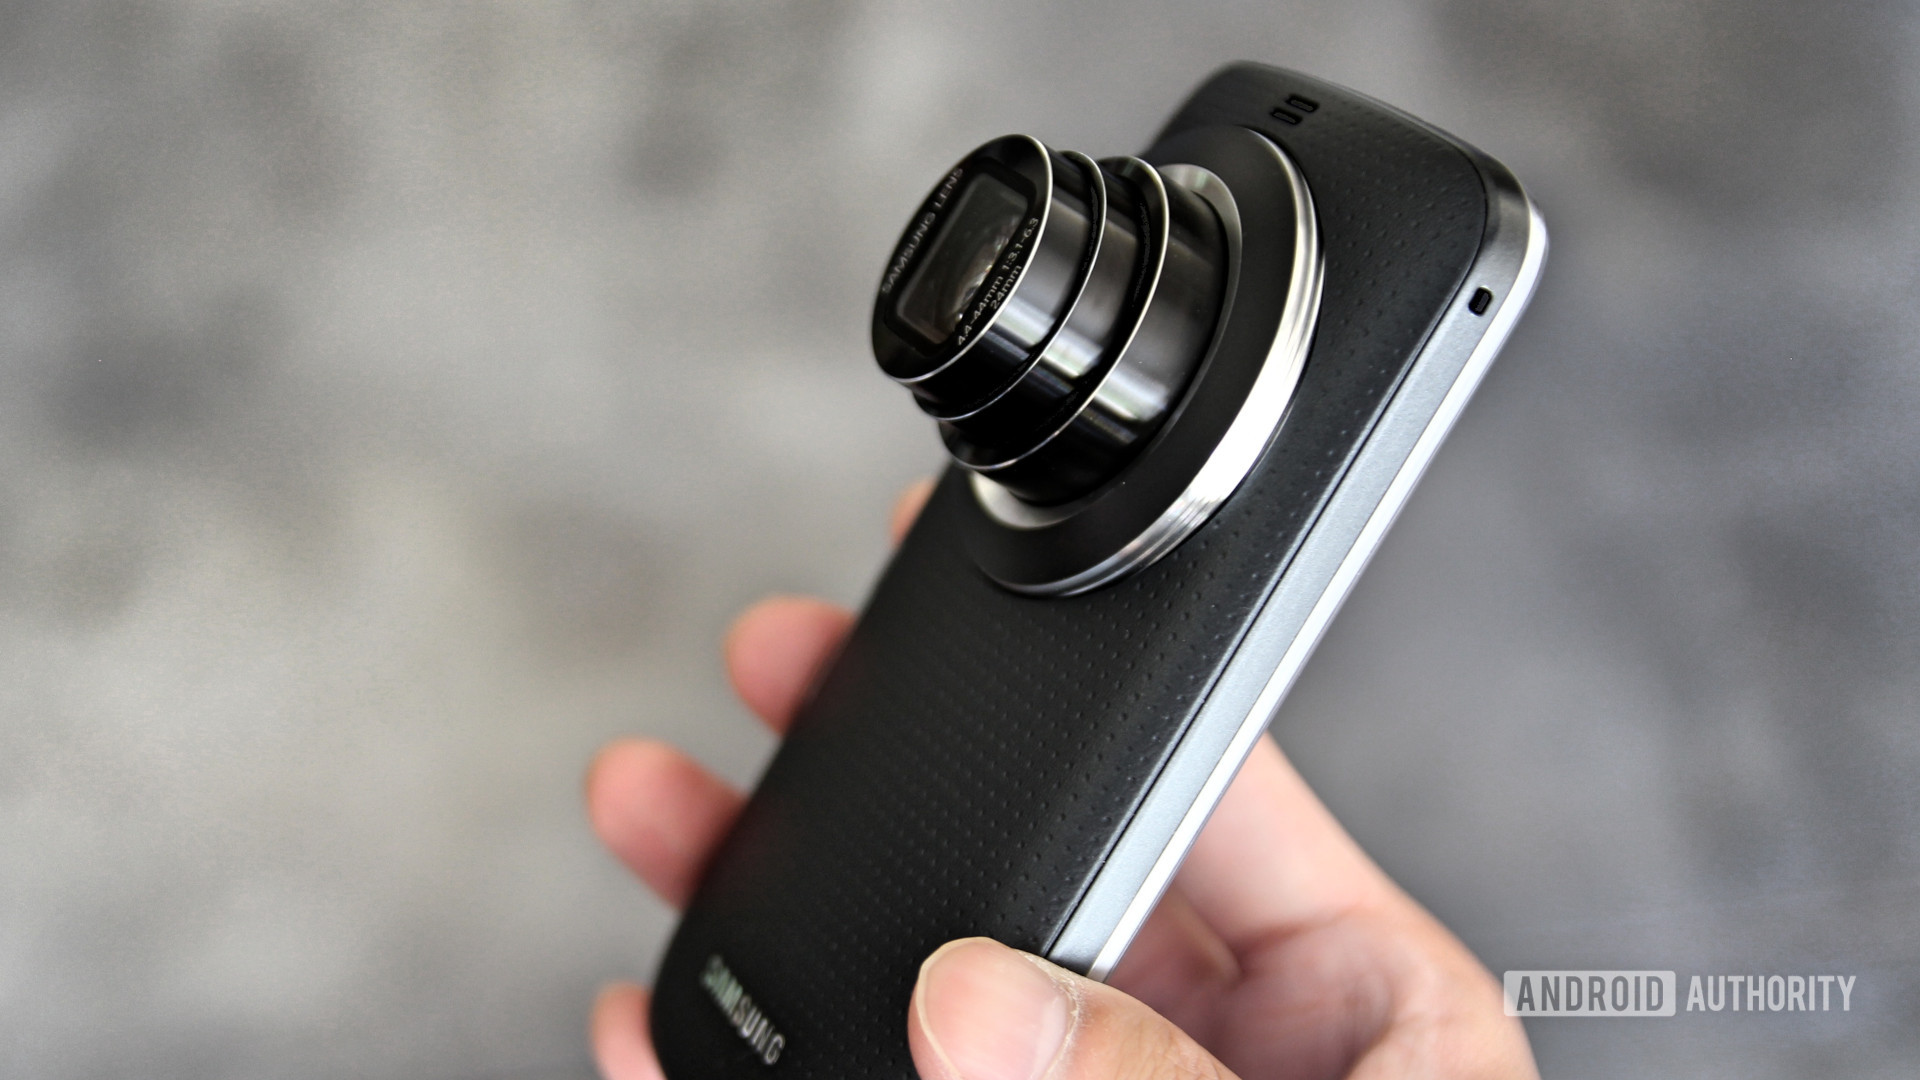 Samsung Galaxy K Zoom zoom lens